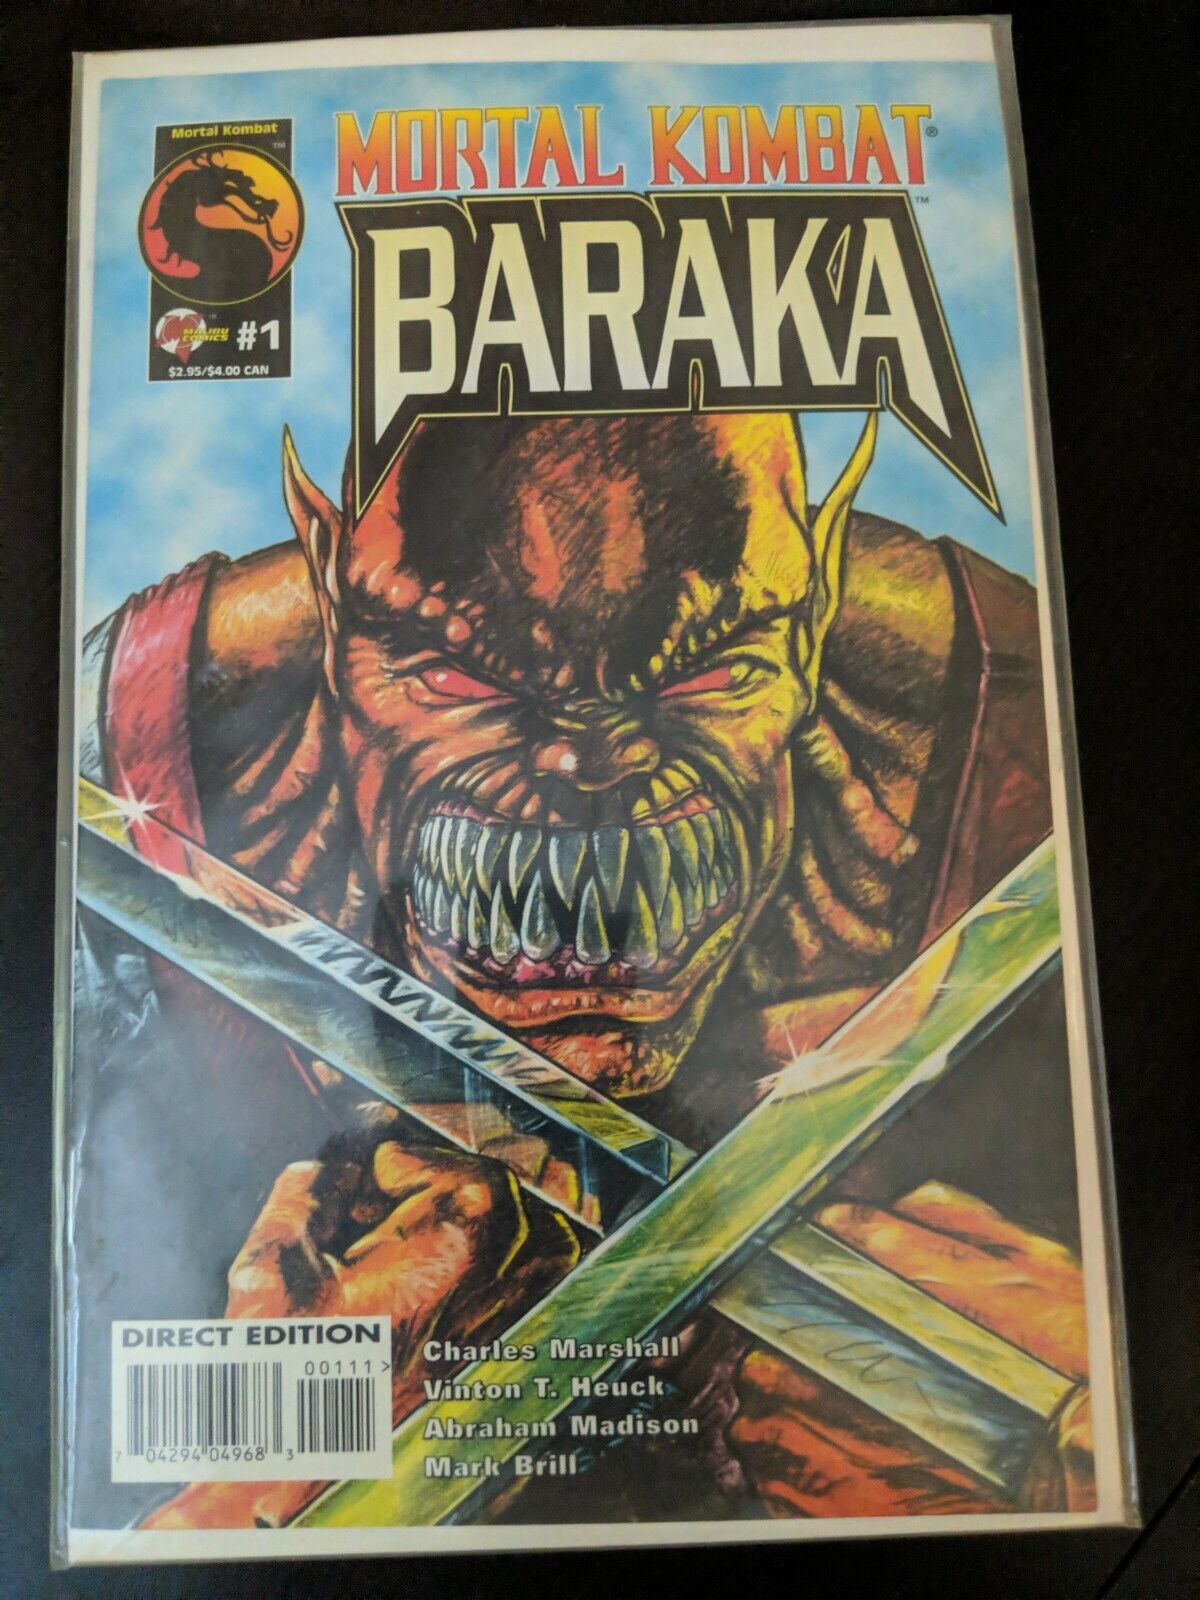 Mortal Kombat:Baraka #1, Direct Edition, 1995, Malibu Comics Very Good Condition